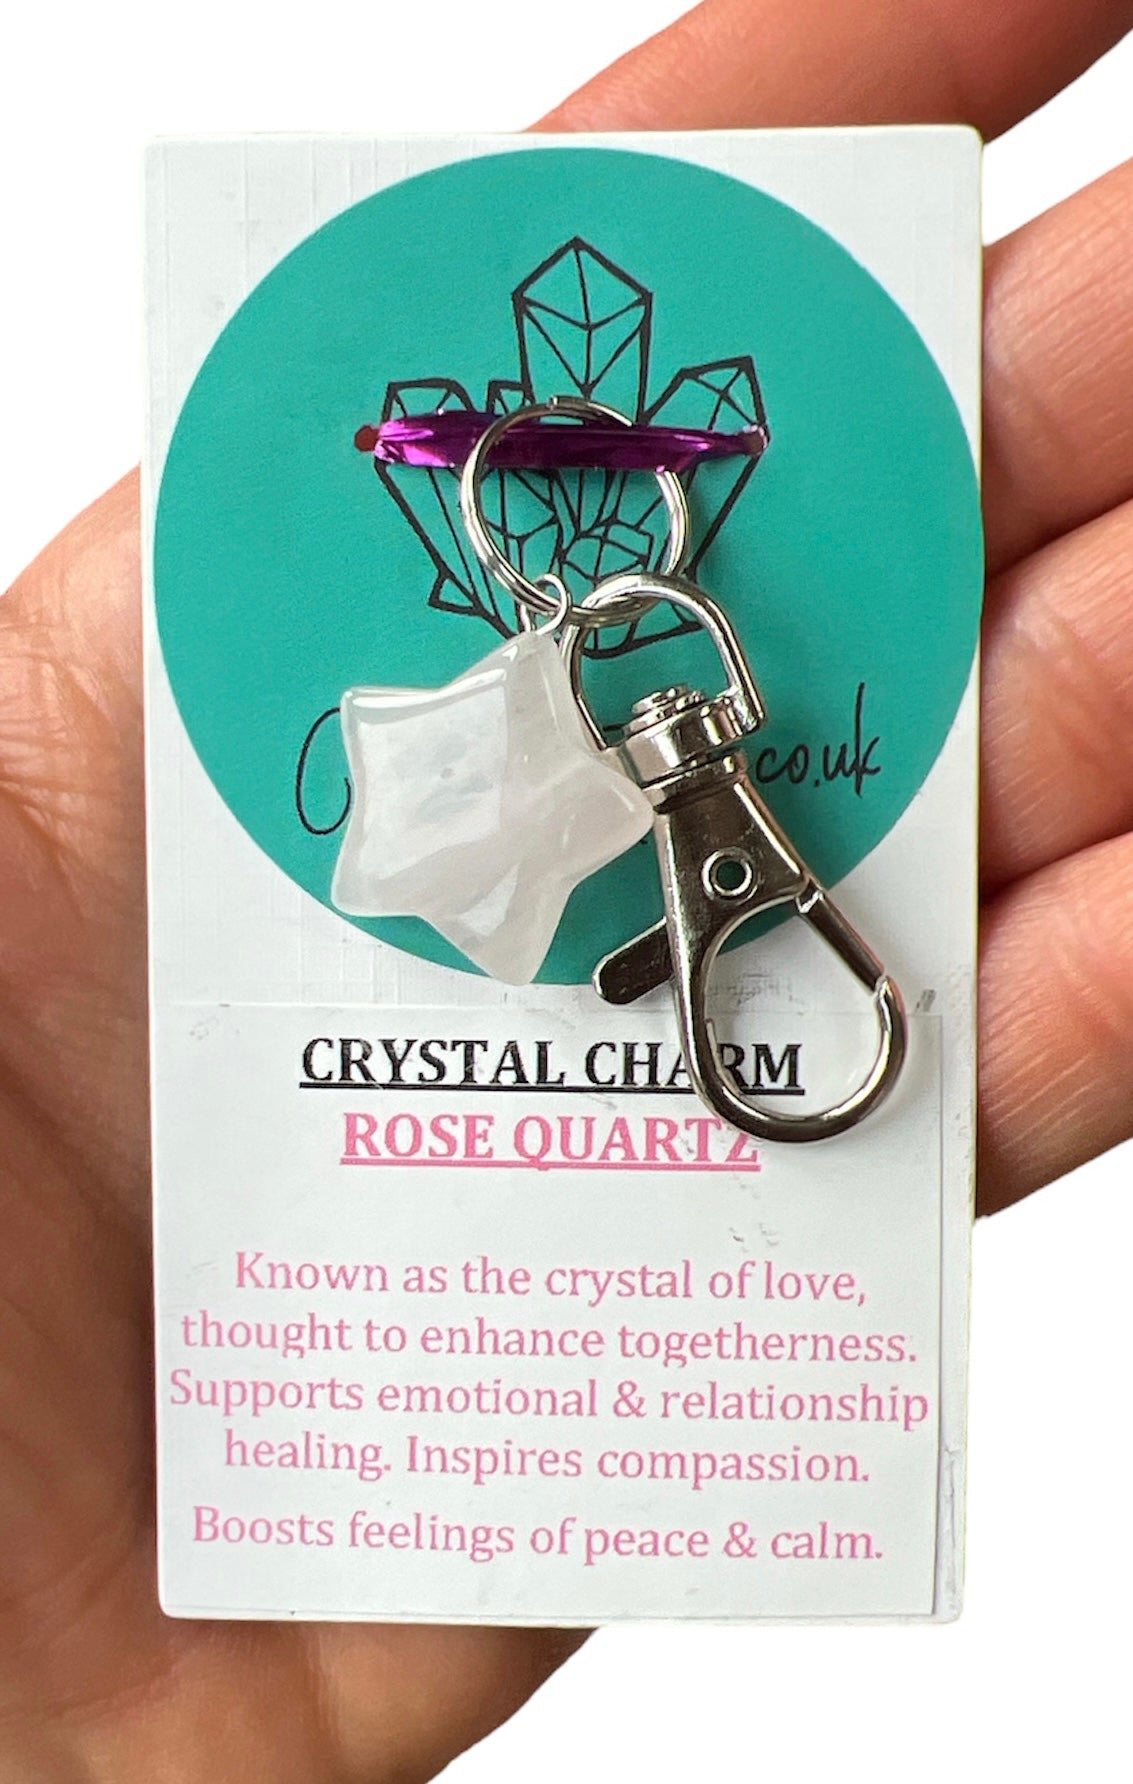 Crystal Gemstone Pet Collar Clip On Charm